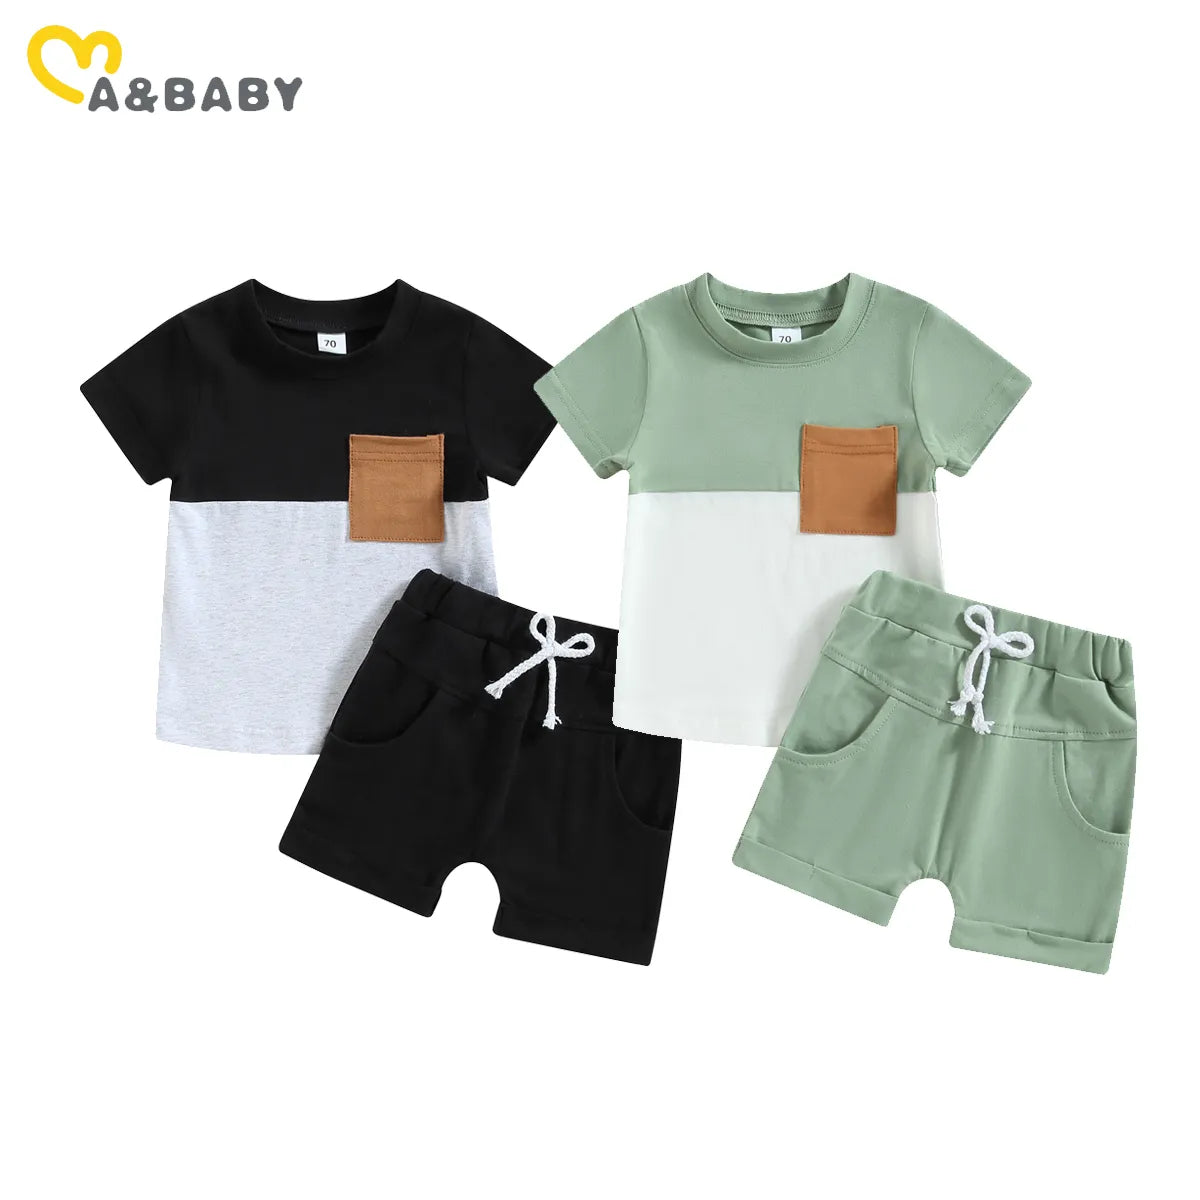 Toddler Infant Baby Boy Girl Clothes Sets